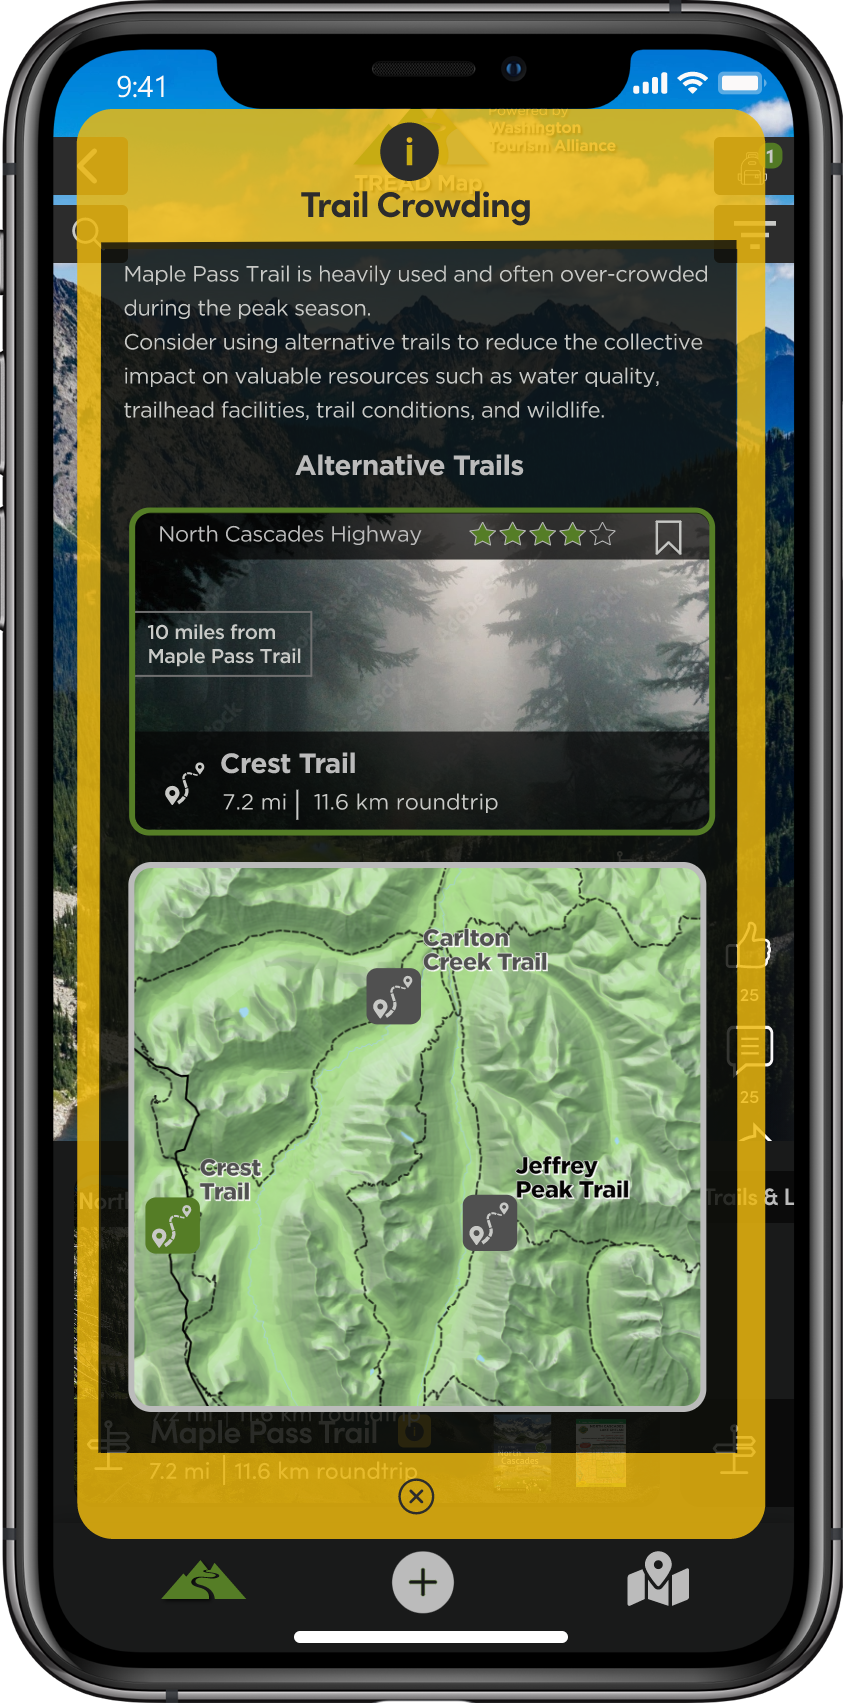 Alternative Trails